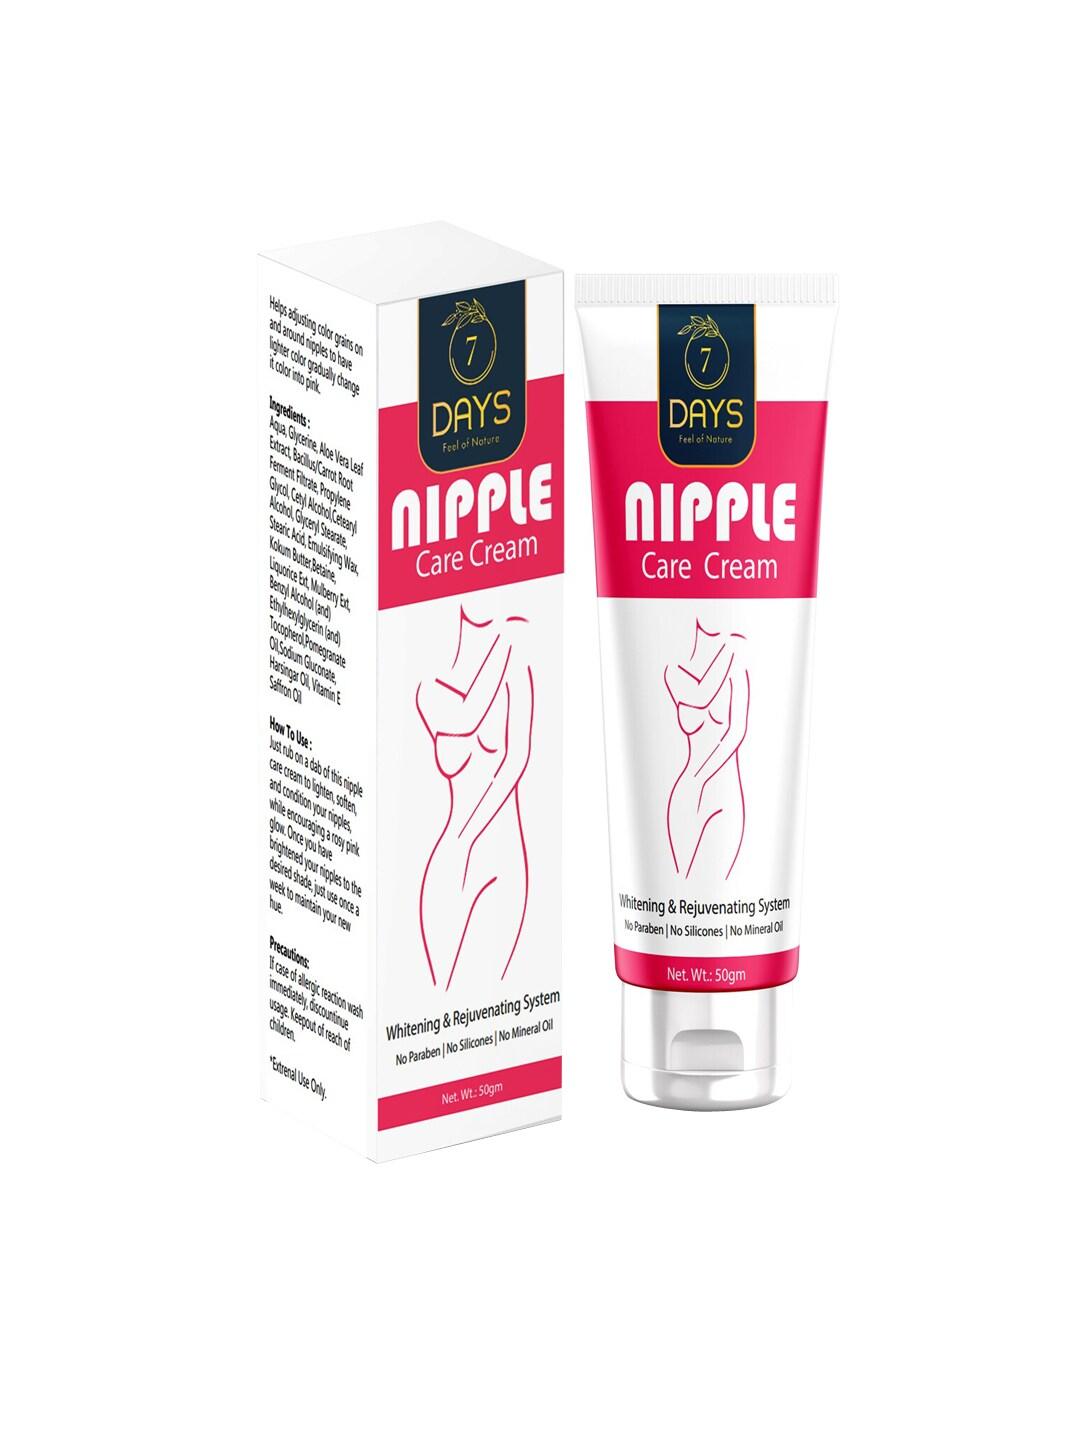 7 DAYS Nipple Care Whitening Cream with Saffron & Aloe Vera - 100g